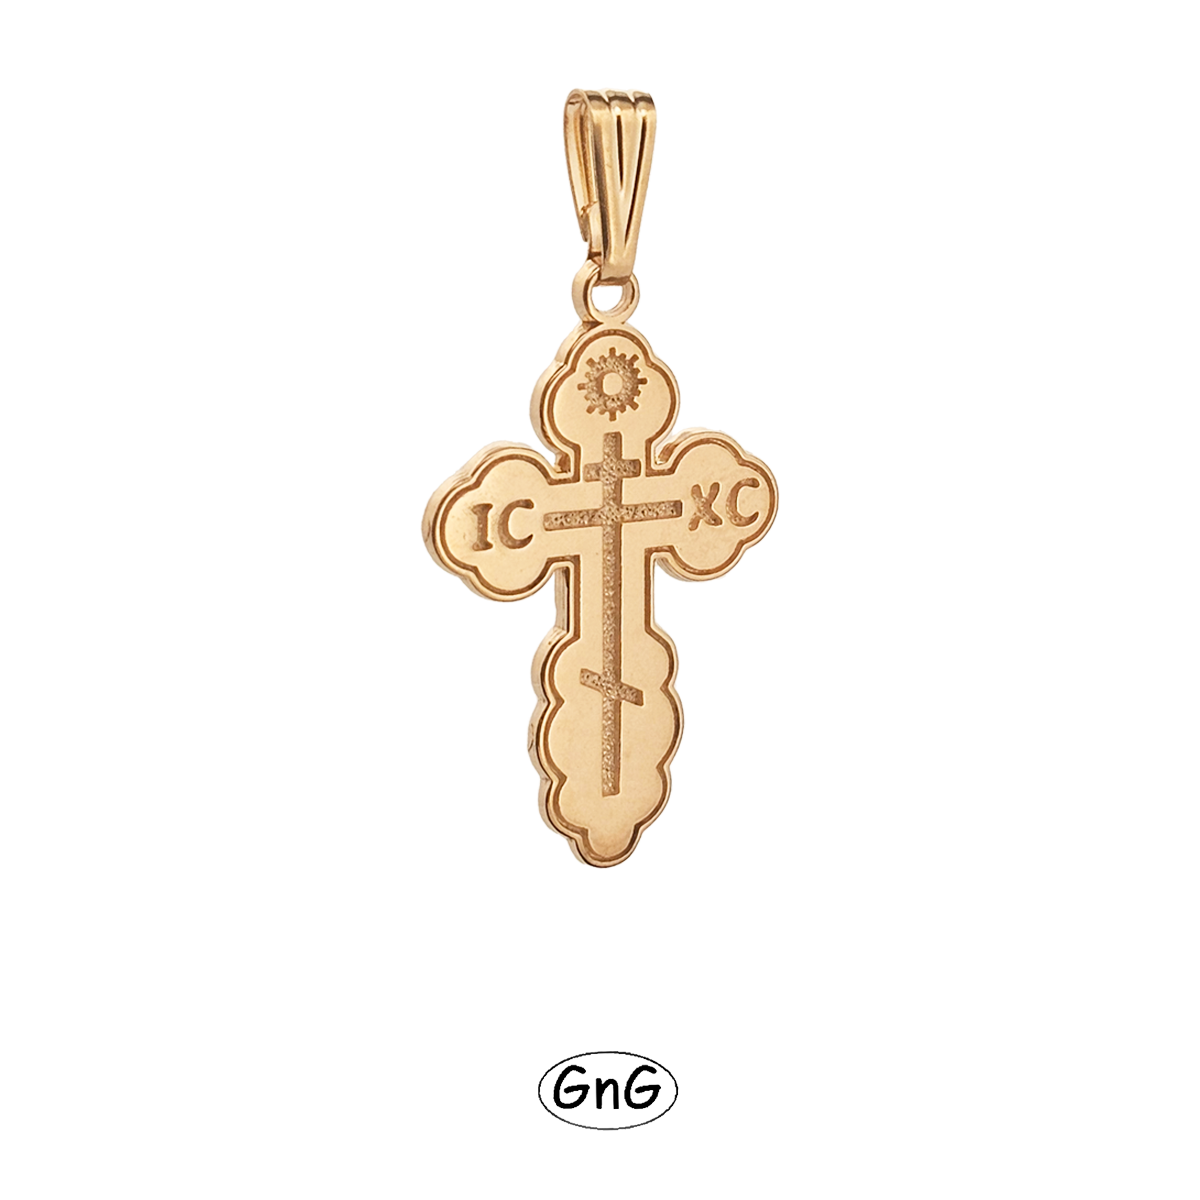 GE11, Gold Orthodox Cross, IC XC, High Polish, GnG Design